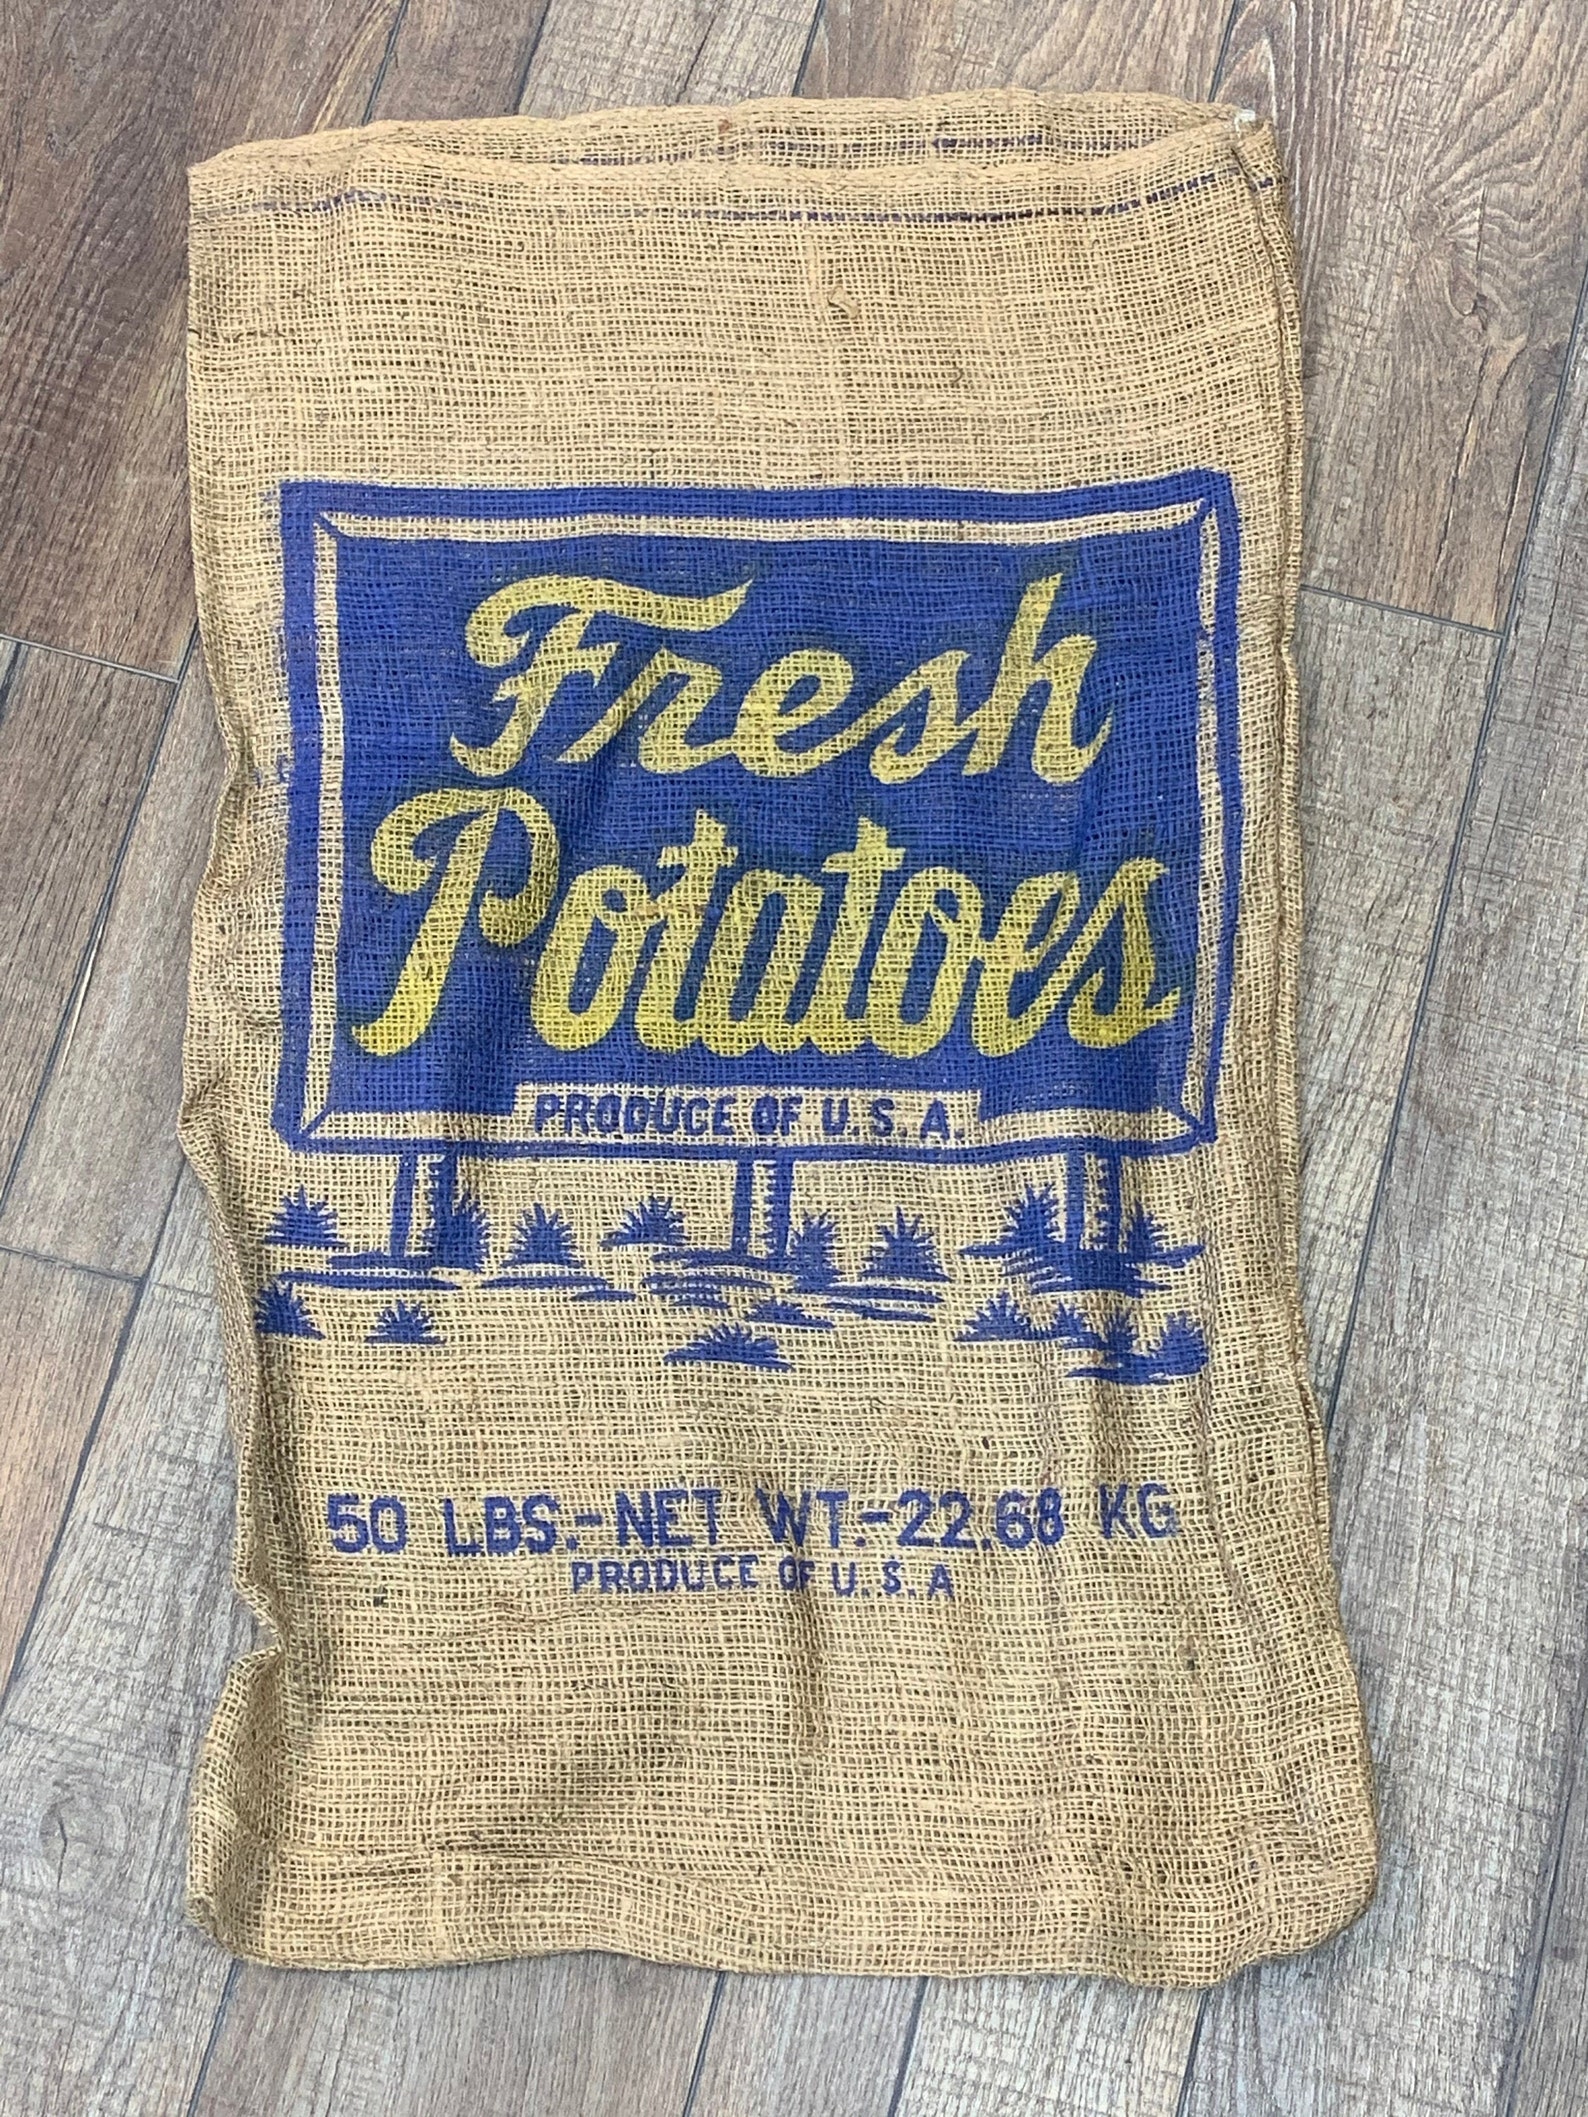 Vintage Burlap Potato Sack Fresh Potatoes 50 lb Bag | Etsy